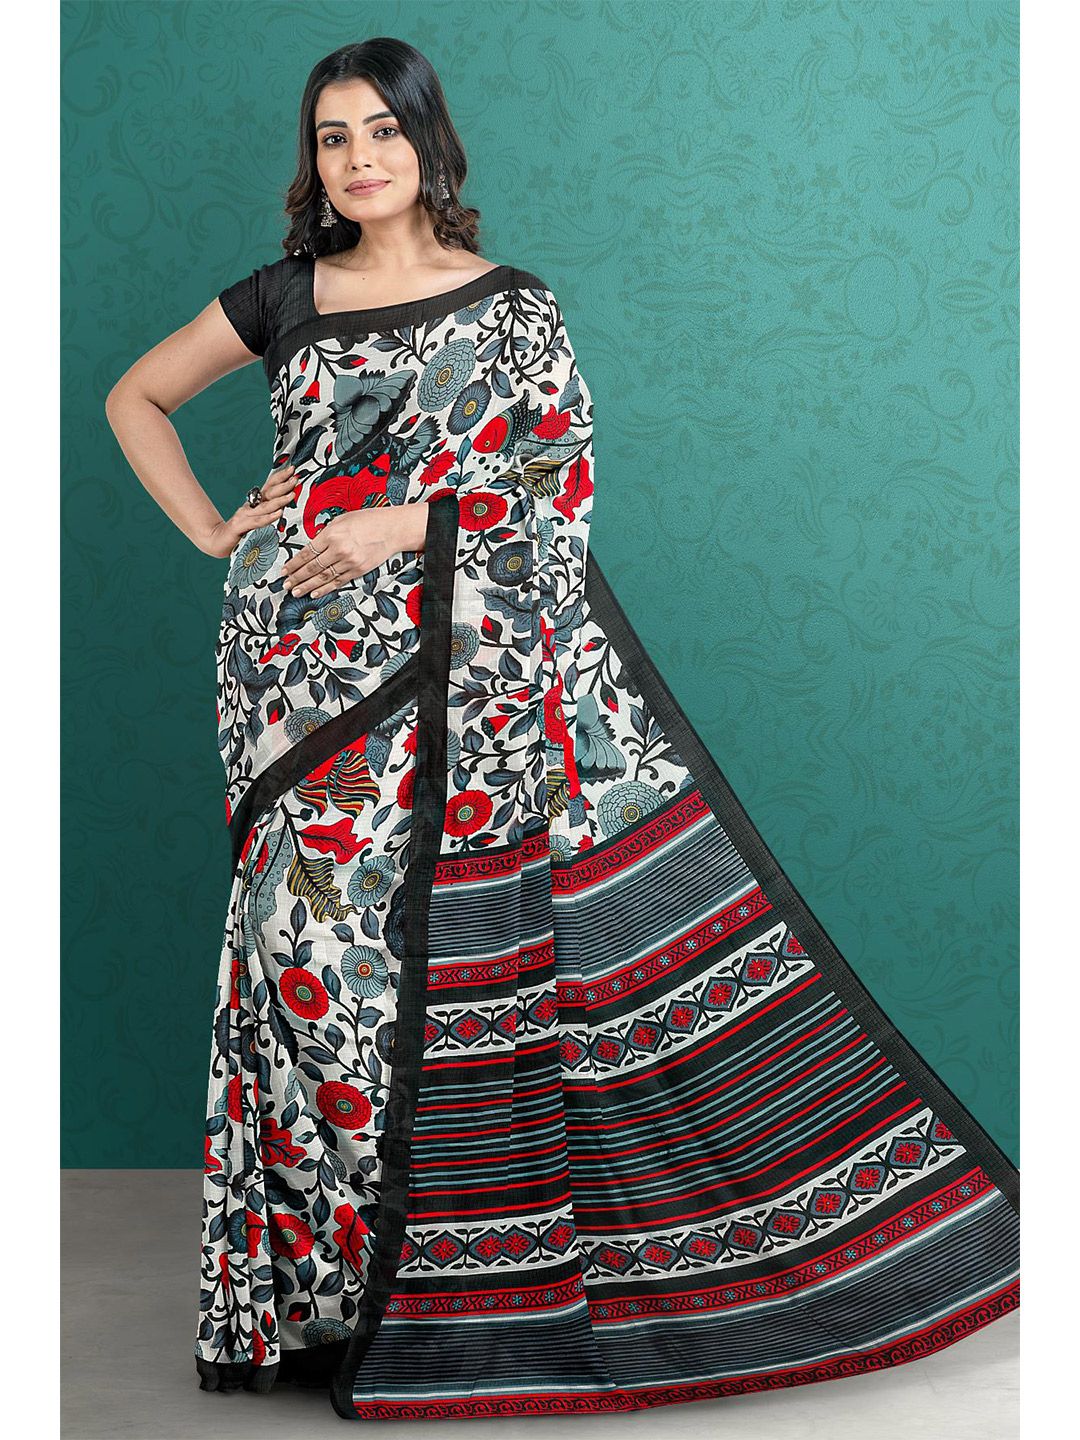 Kalamandir White & Black Floral Silk Blend Saree Price in India